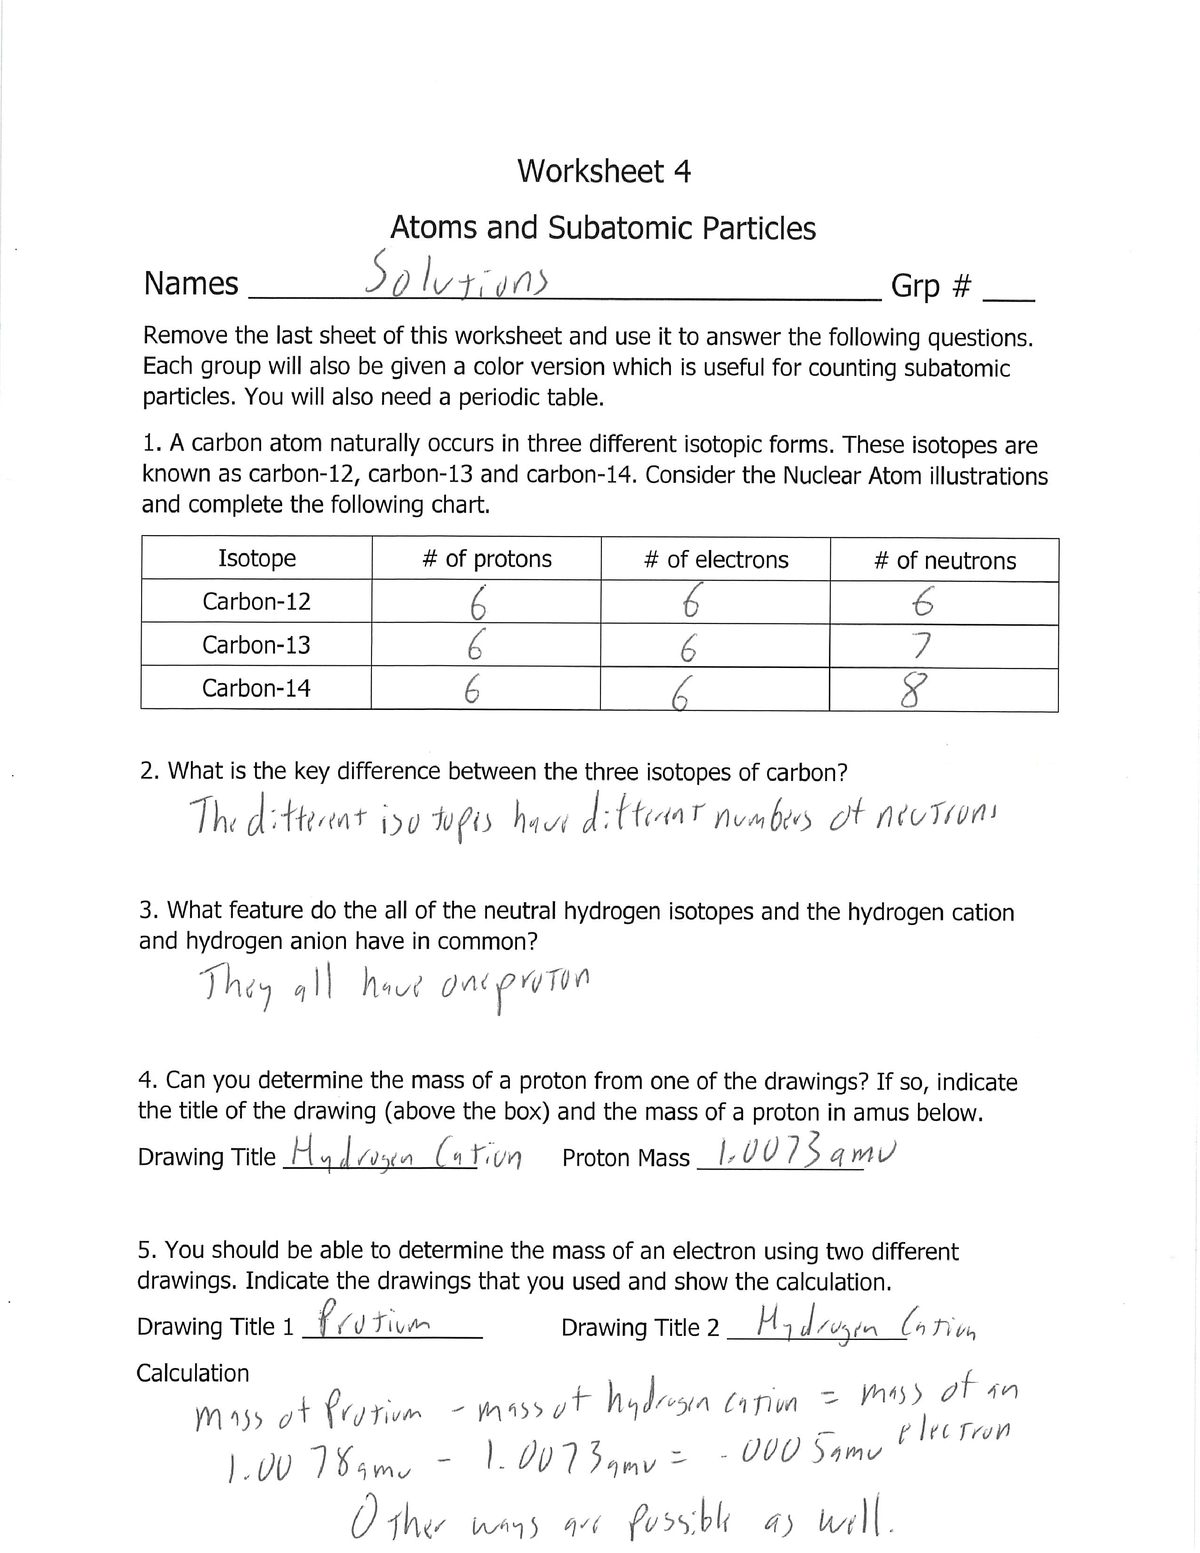 Worksheet 4 Solutions CHEM 108 Studocu